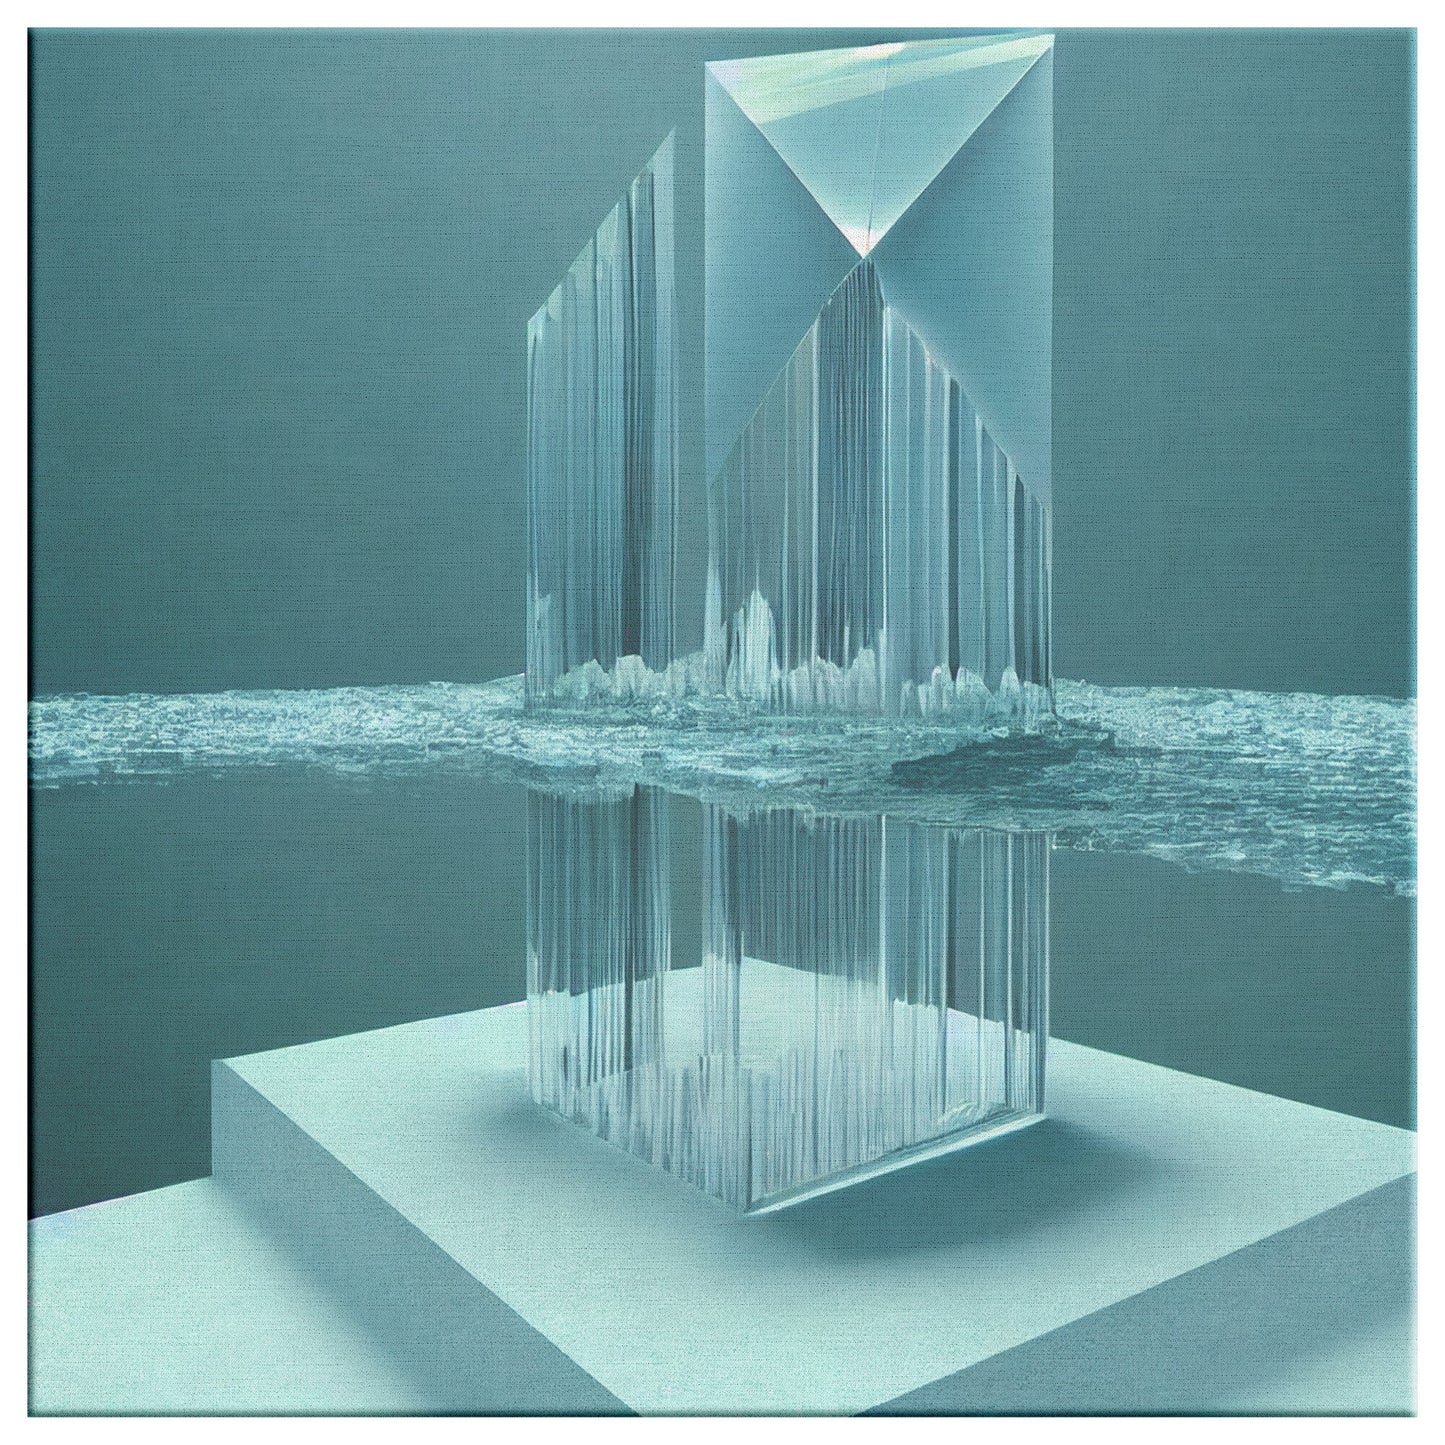 Abstract Waterfall Concept Art, Geometric Glass Concept Art, Midjourney AI Art